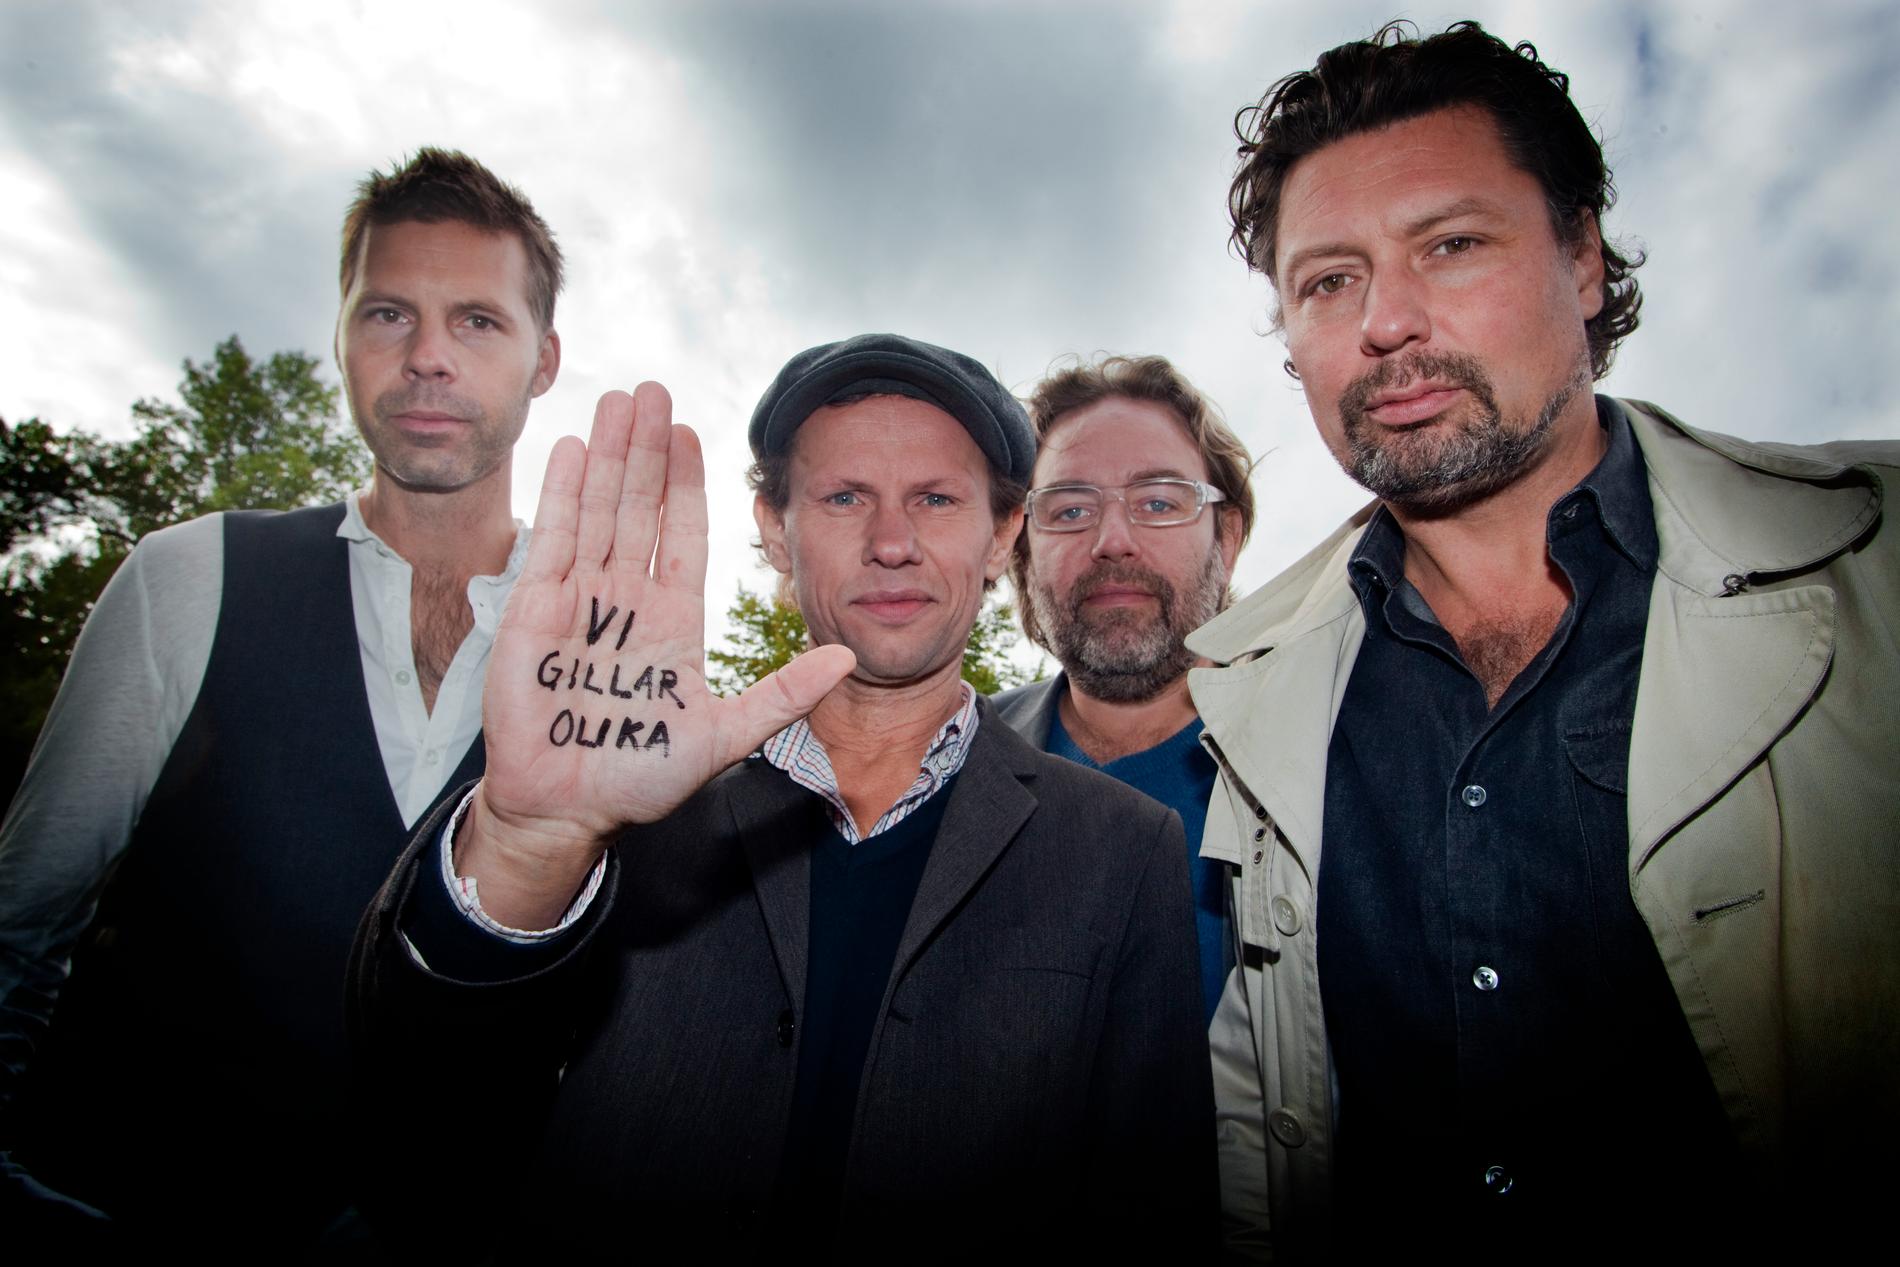 Aftonbladets antirasism-kampanj ”Vi gillar olika” 2010